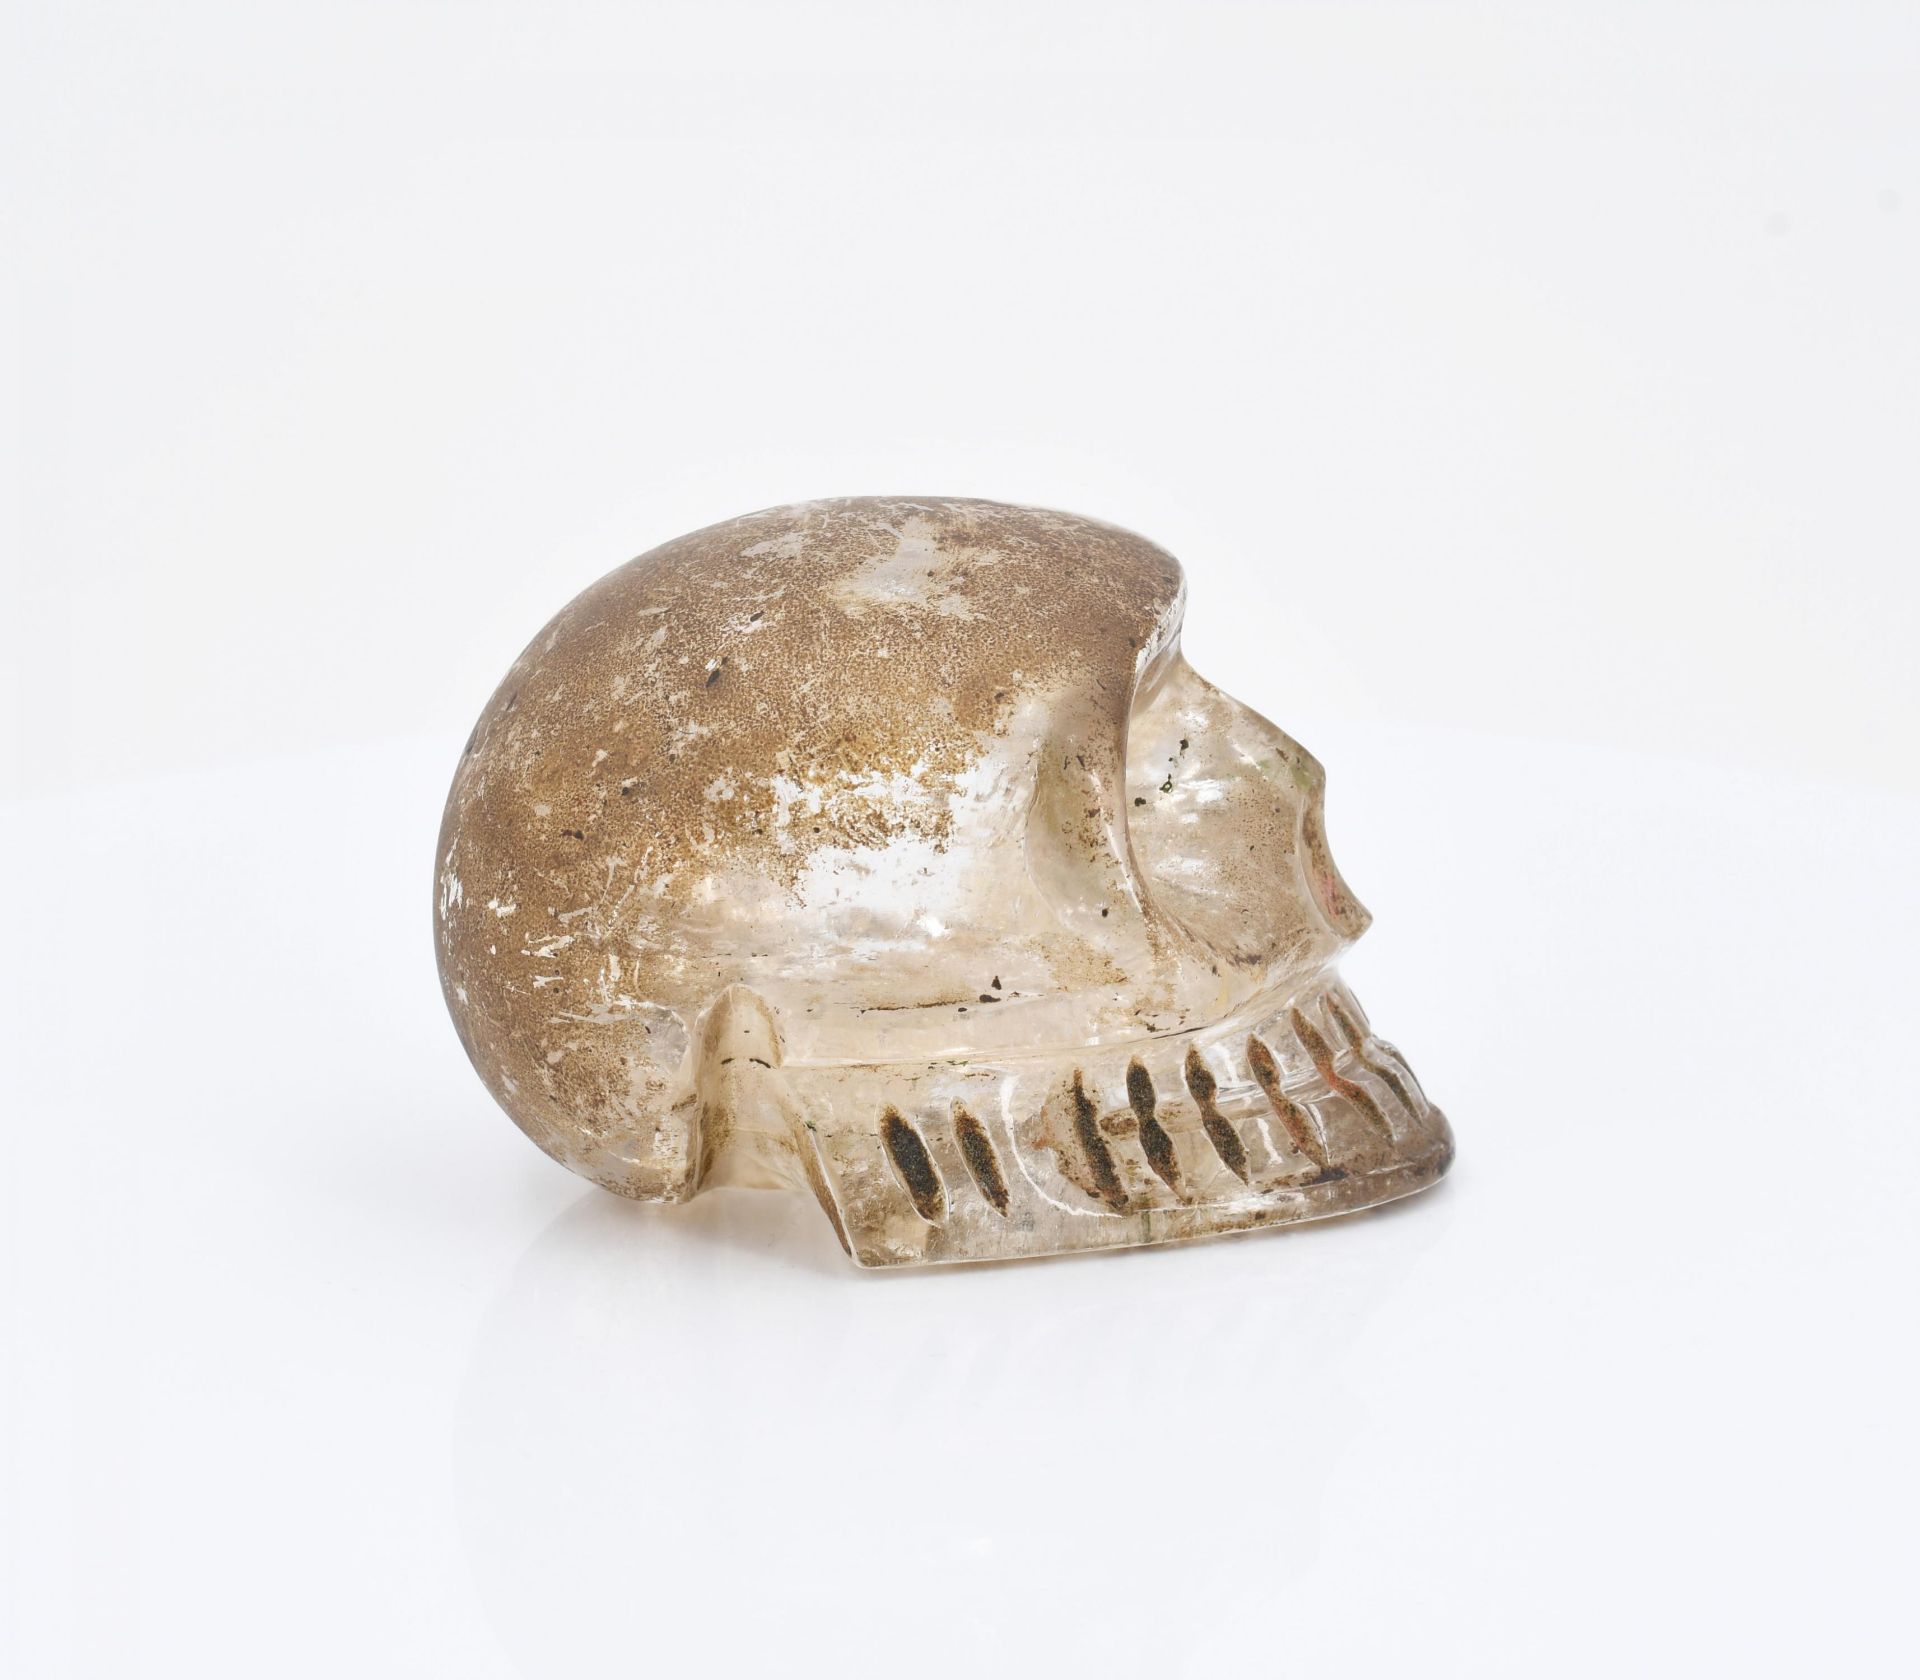 Small skull - Image 5 of 6